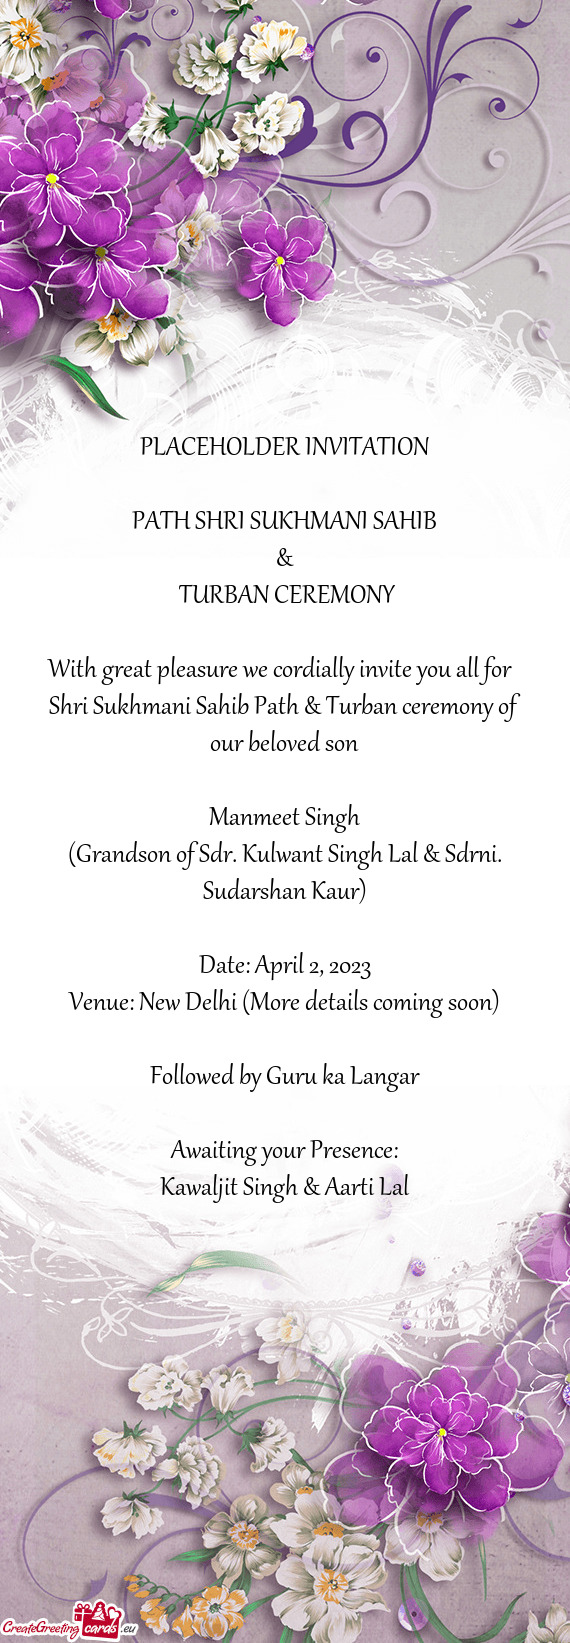 Shri Sukhmani Sahib Path & Turban ceremony of our beloved son